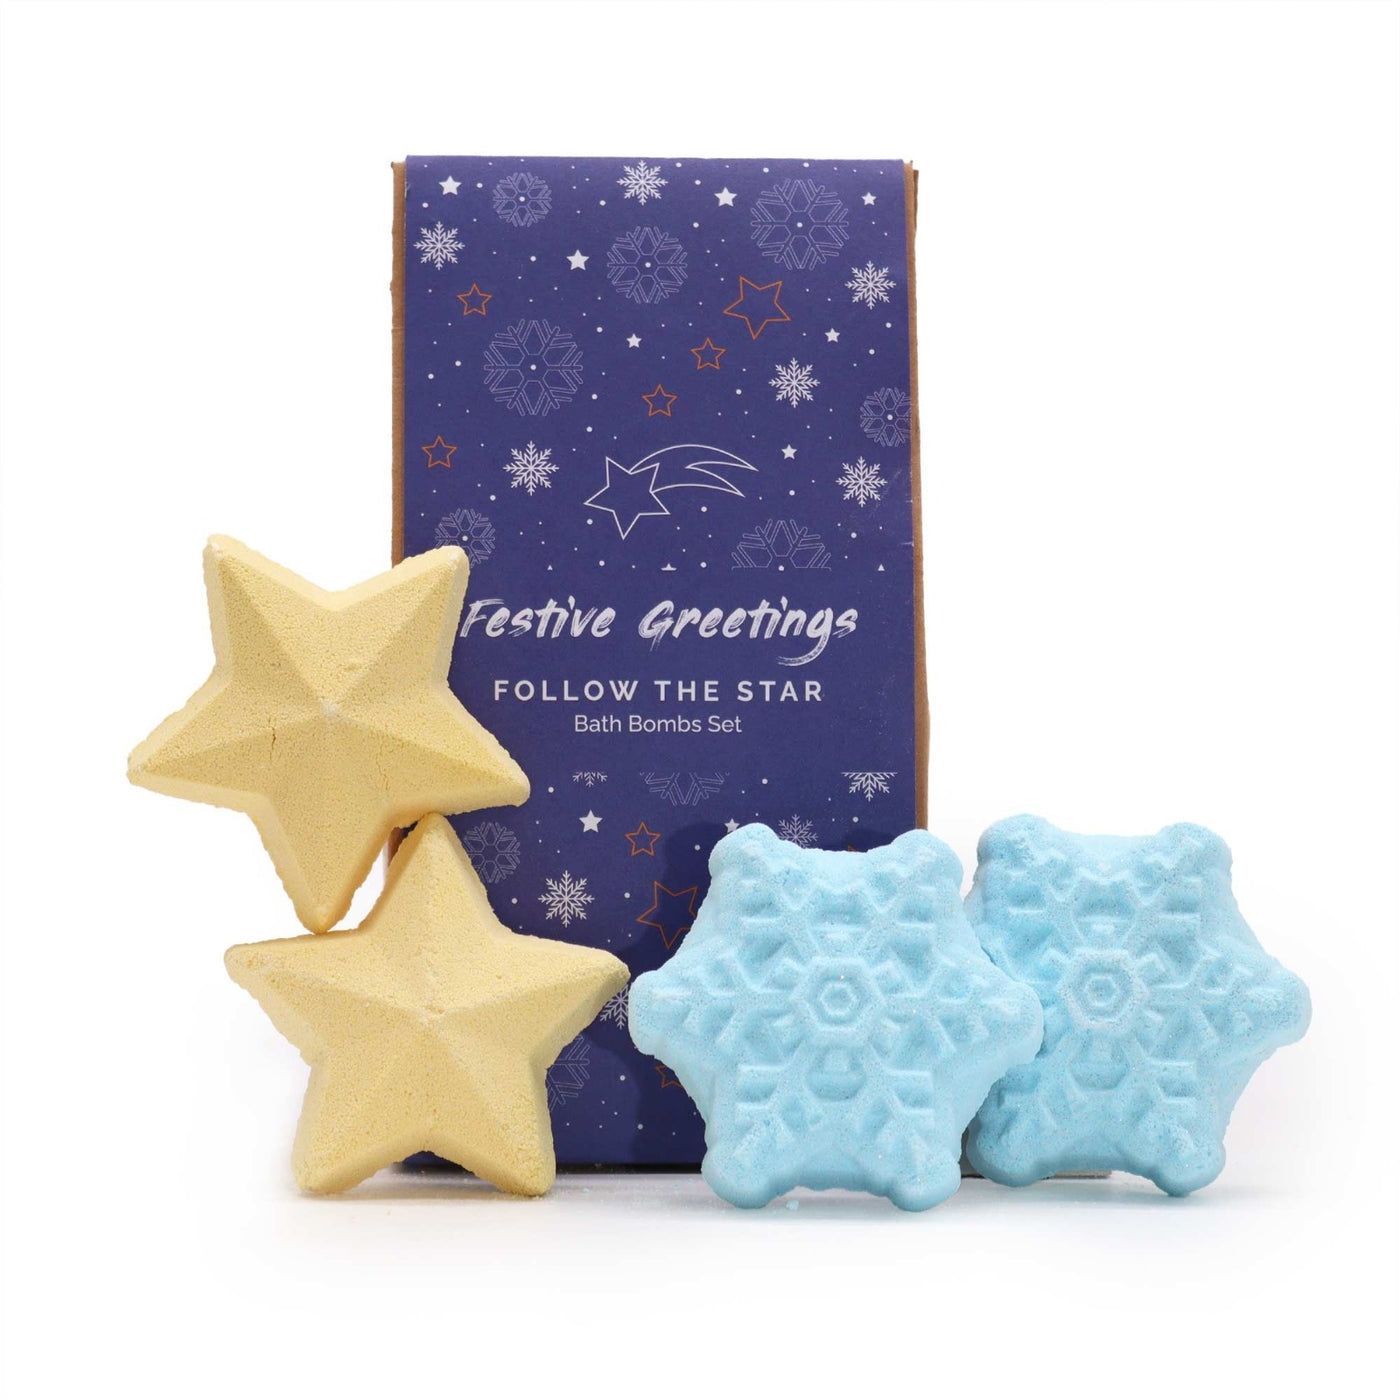 Stars And Snowflakes, Novelty Winter Bath Bombs Gift Set.